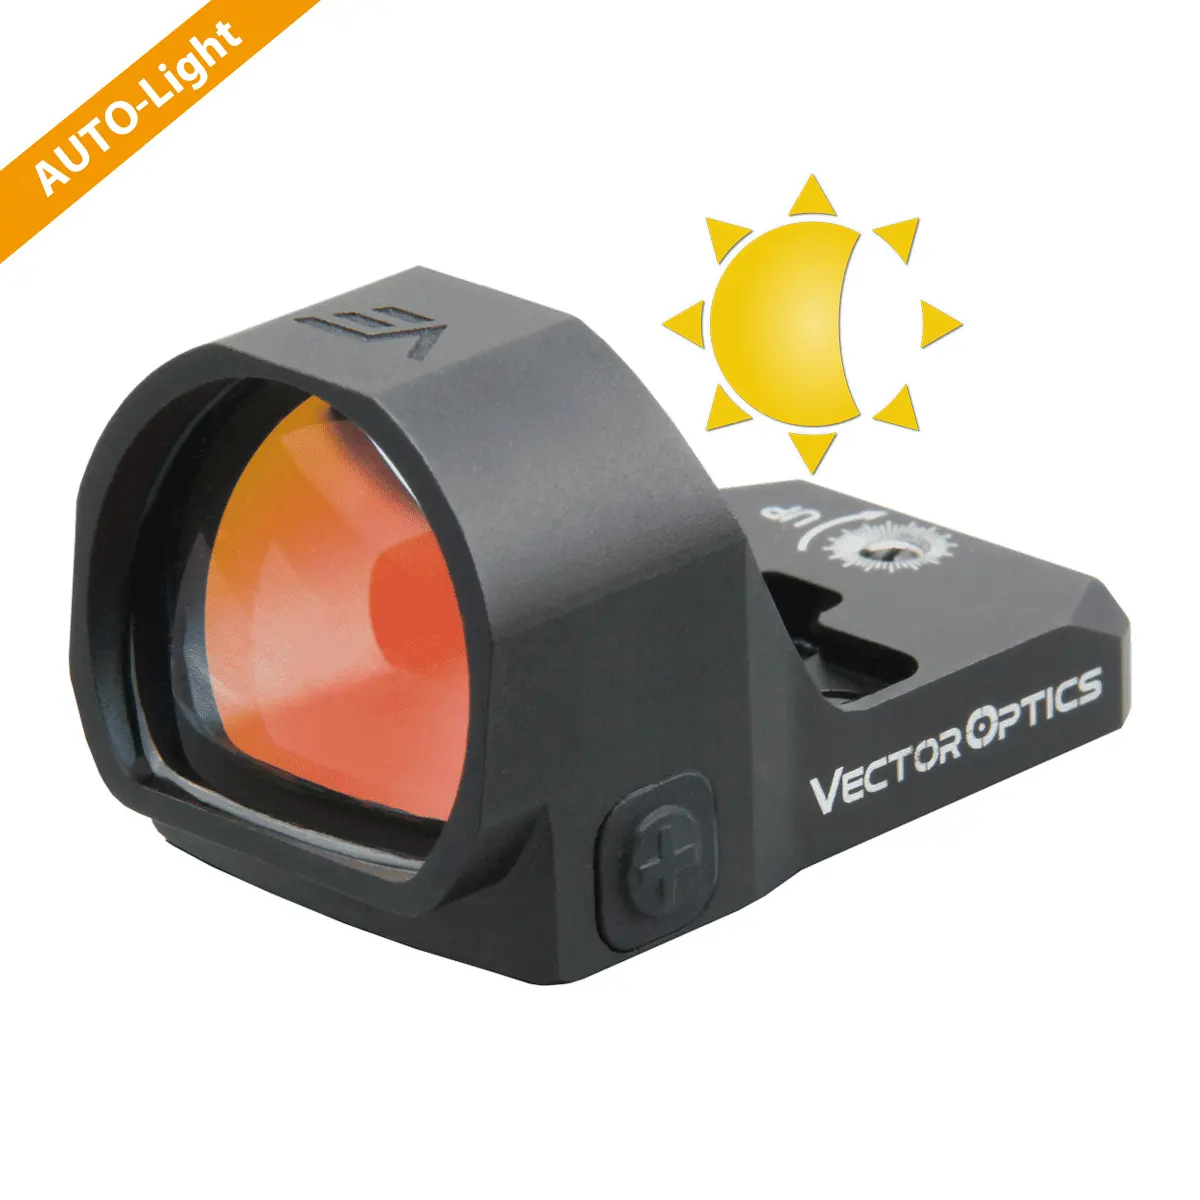 OEM Manufacturer Wholesale Vector Optics Red Dot Sight with Self-adjust Auto Light Sensor Brightness